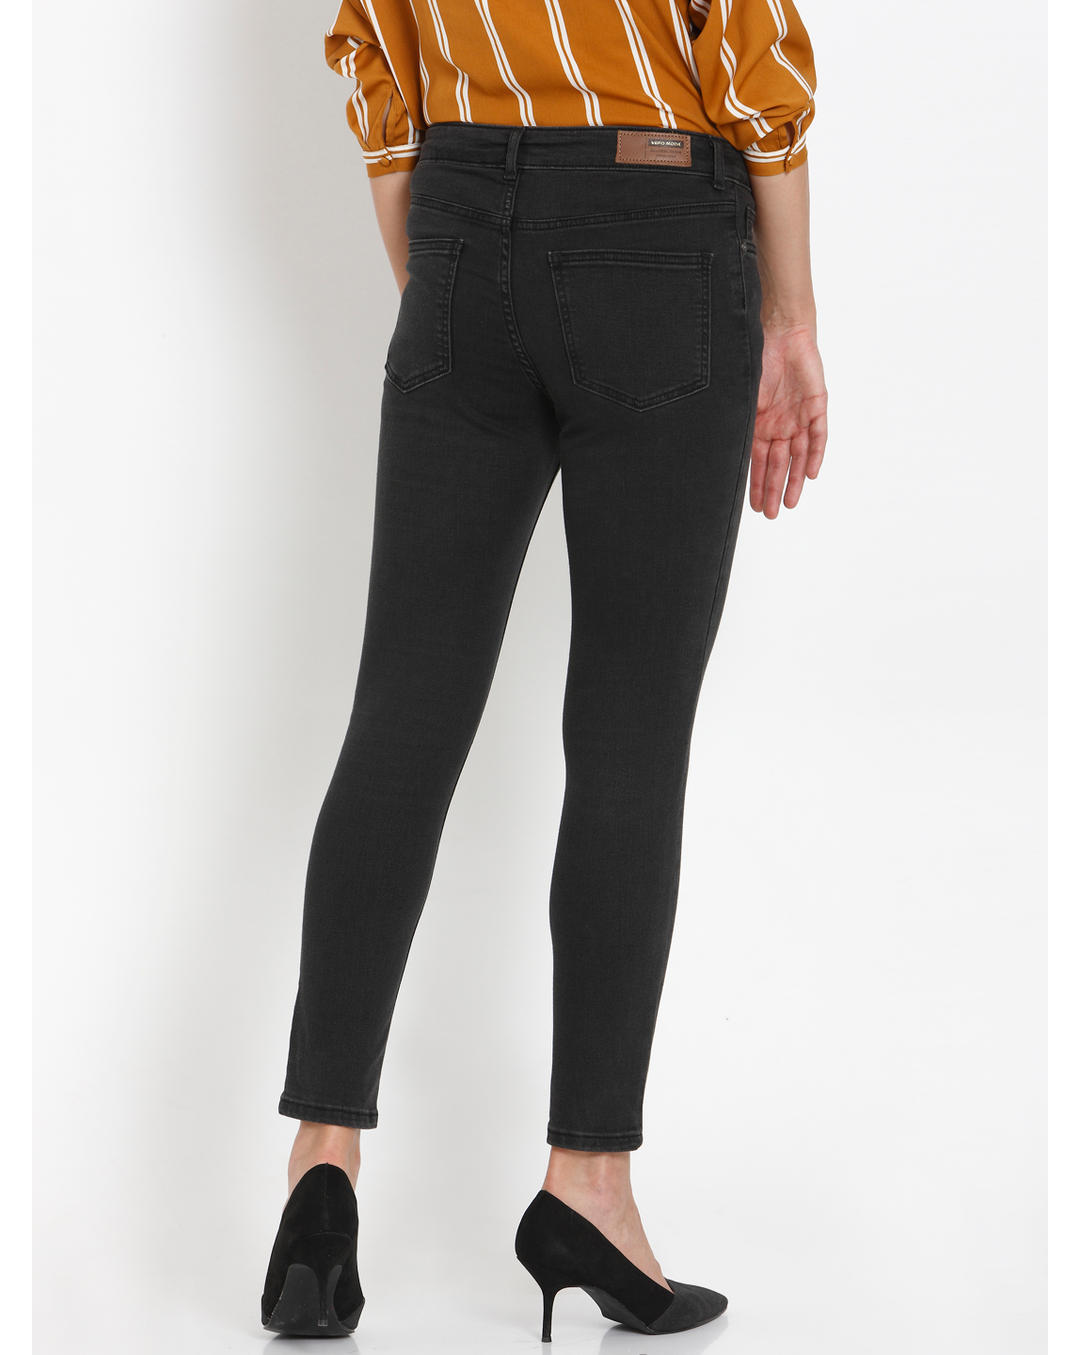 Buy Women Dark Grey Mid Rise Faded Skinny Fit Jeans Online